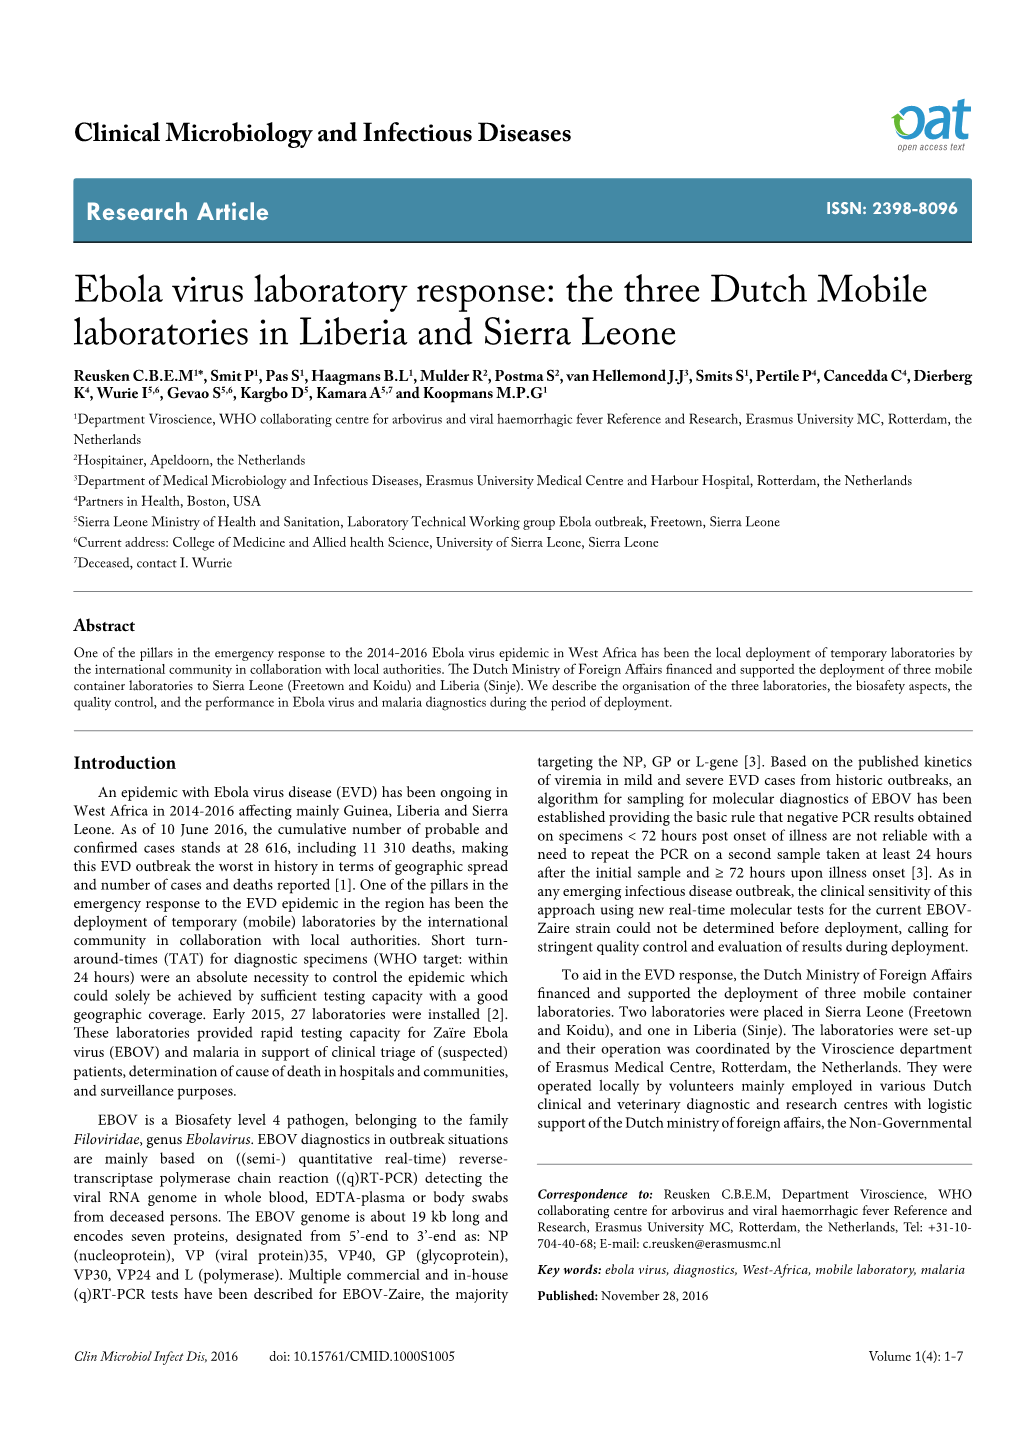 Ebola Virus Laboratory Response